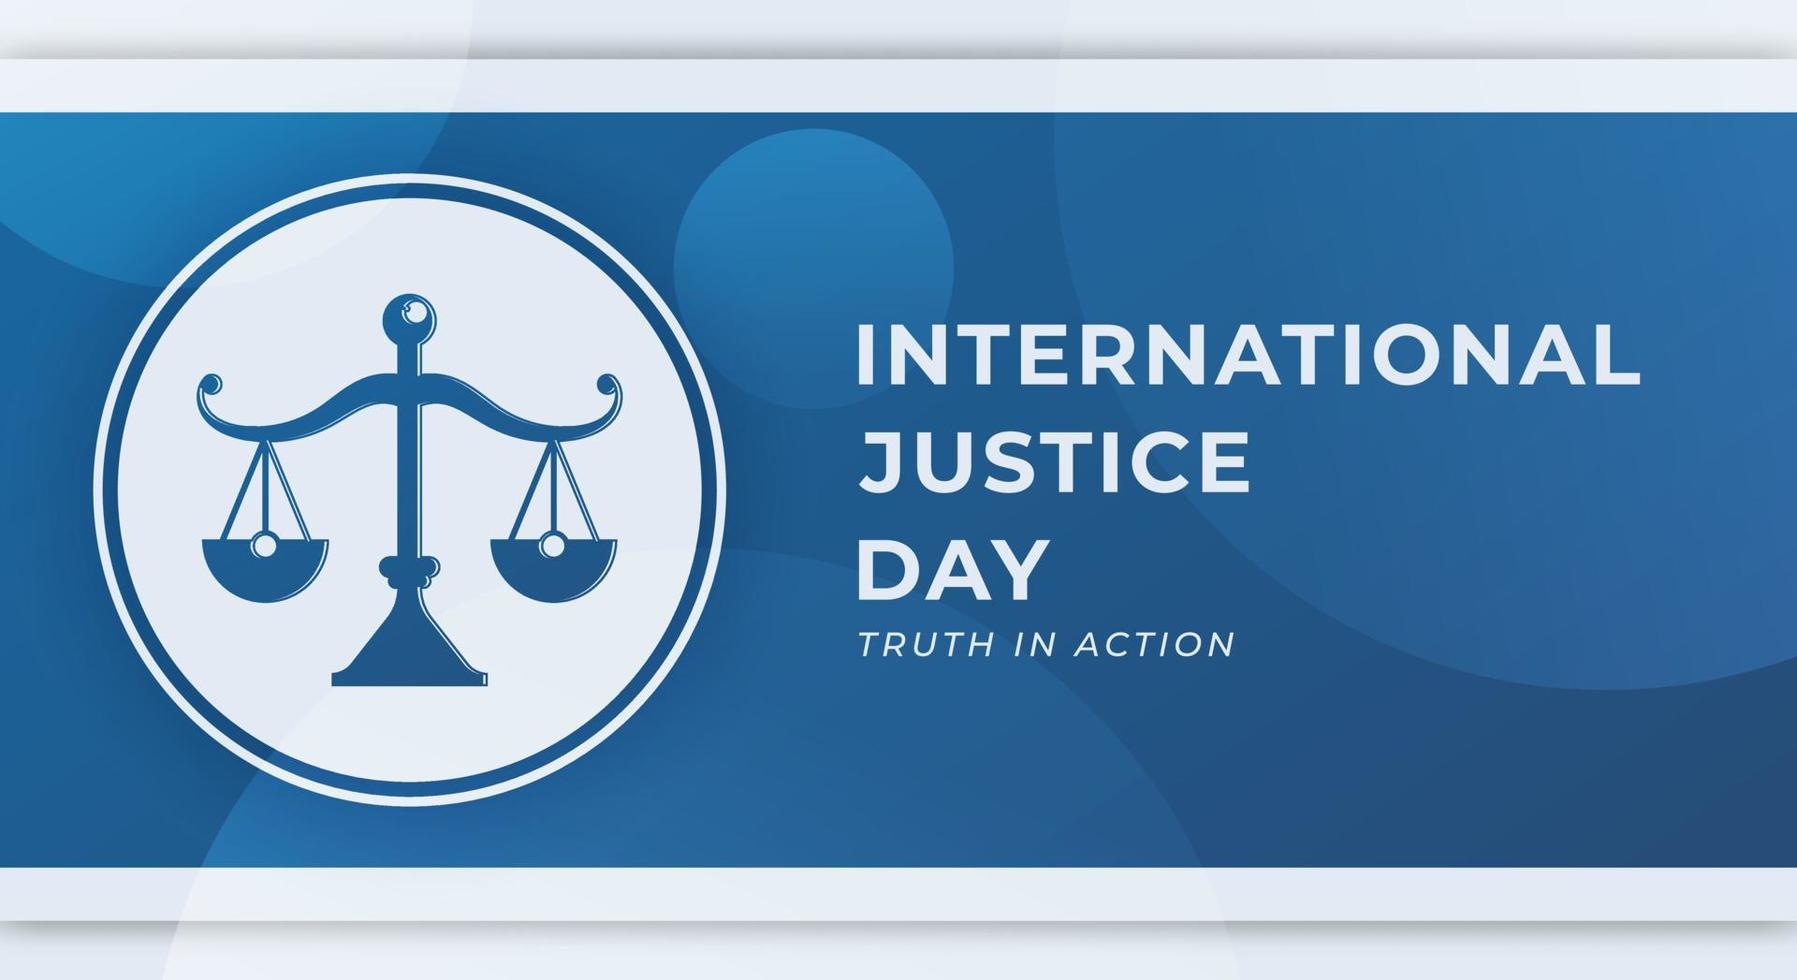 Happy International Justice Day July Celebration Vector Design Illustration. Template for Background, Poster, Banner, Advertising, Greeting Card or Print Design Element